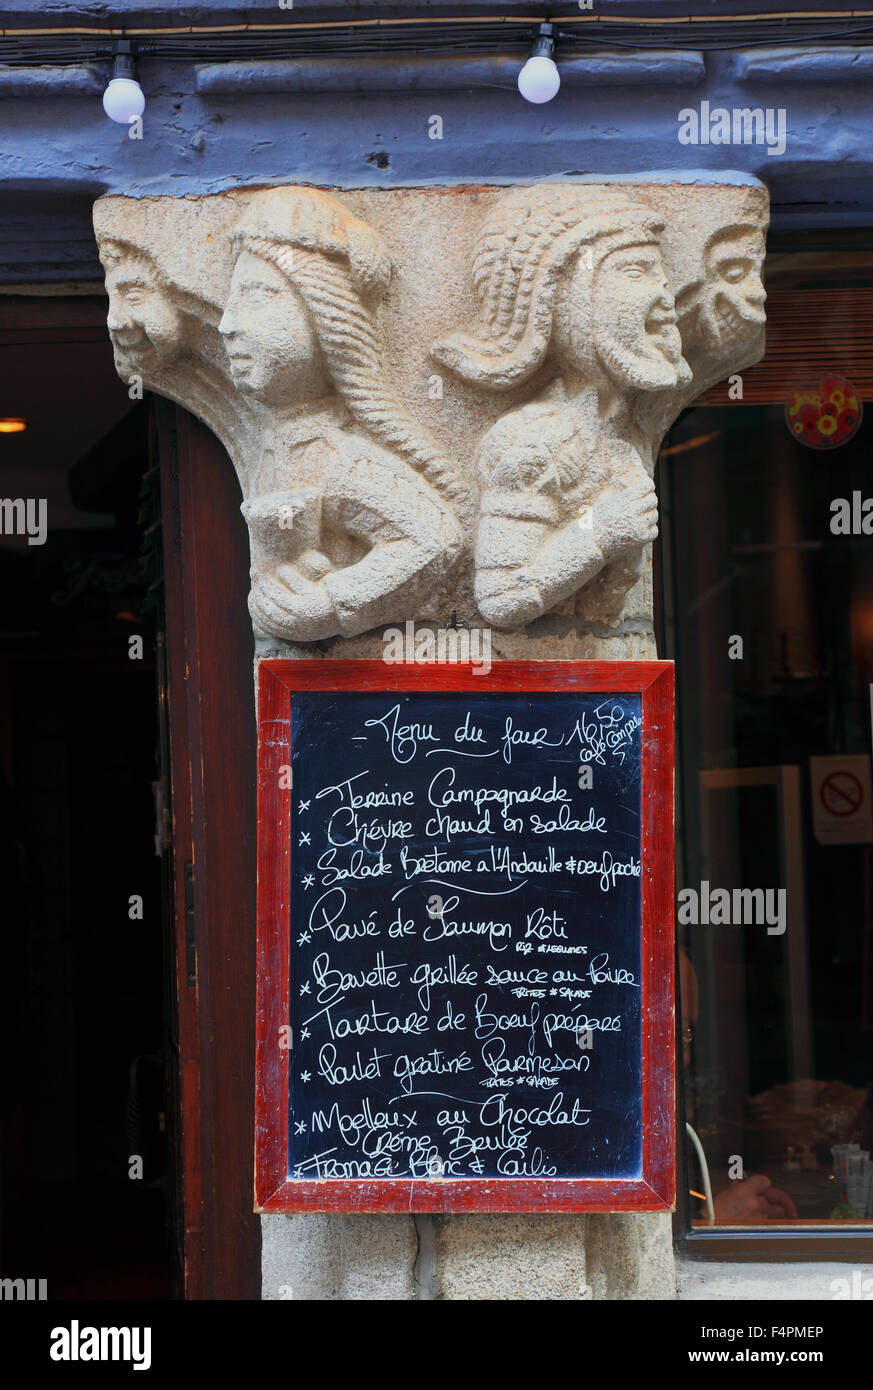 France, Brittany, Quimper, menu at a Restaurant Stock Photo